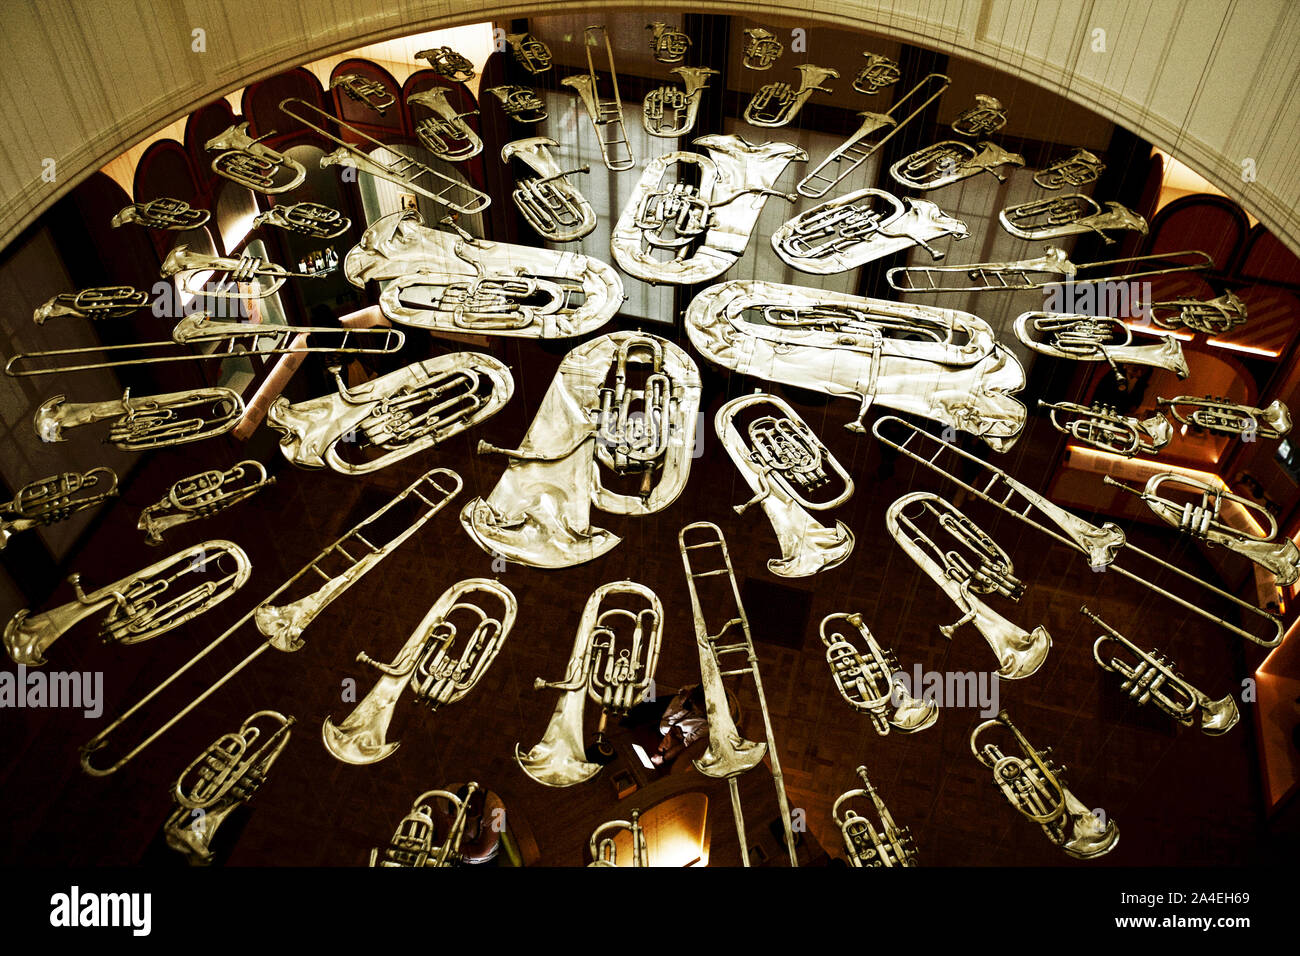 Concepto de música, instrumentos de música, instrumentos musicales. Foto de stock